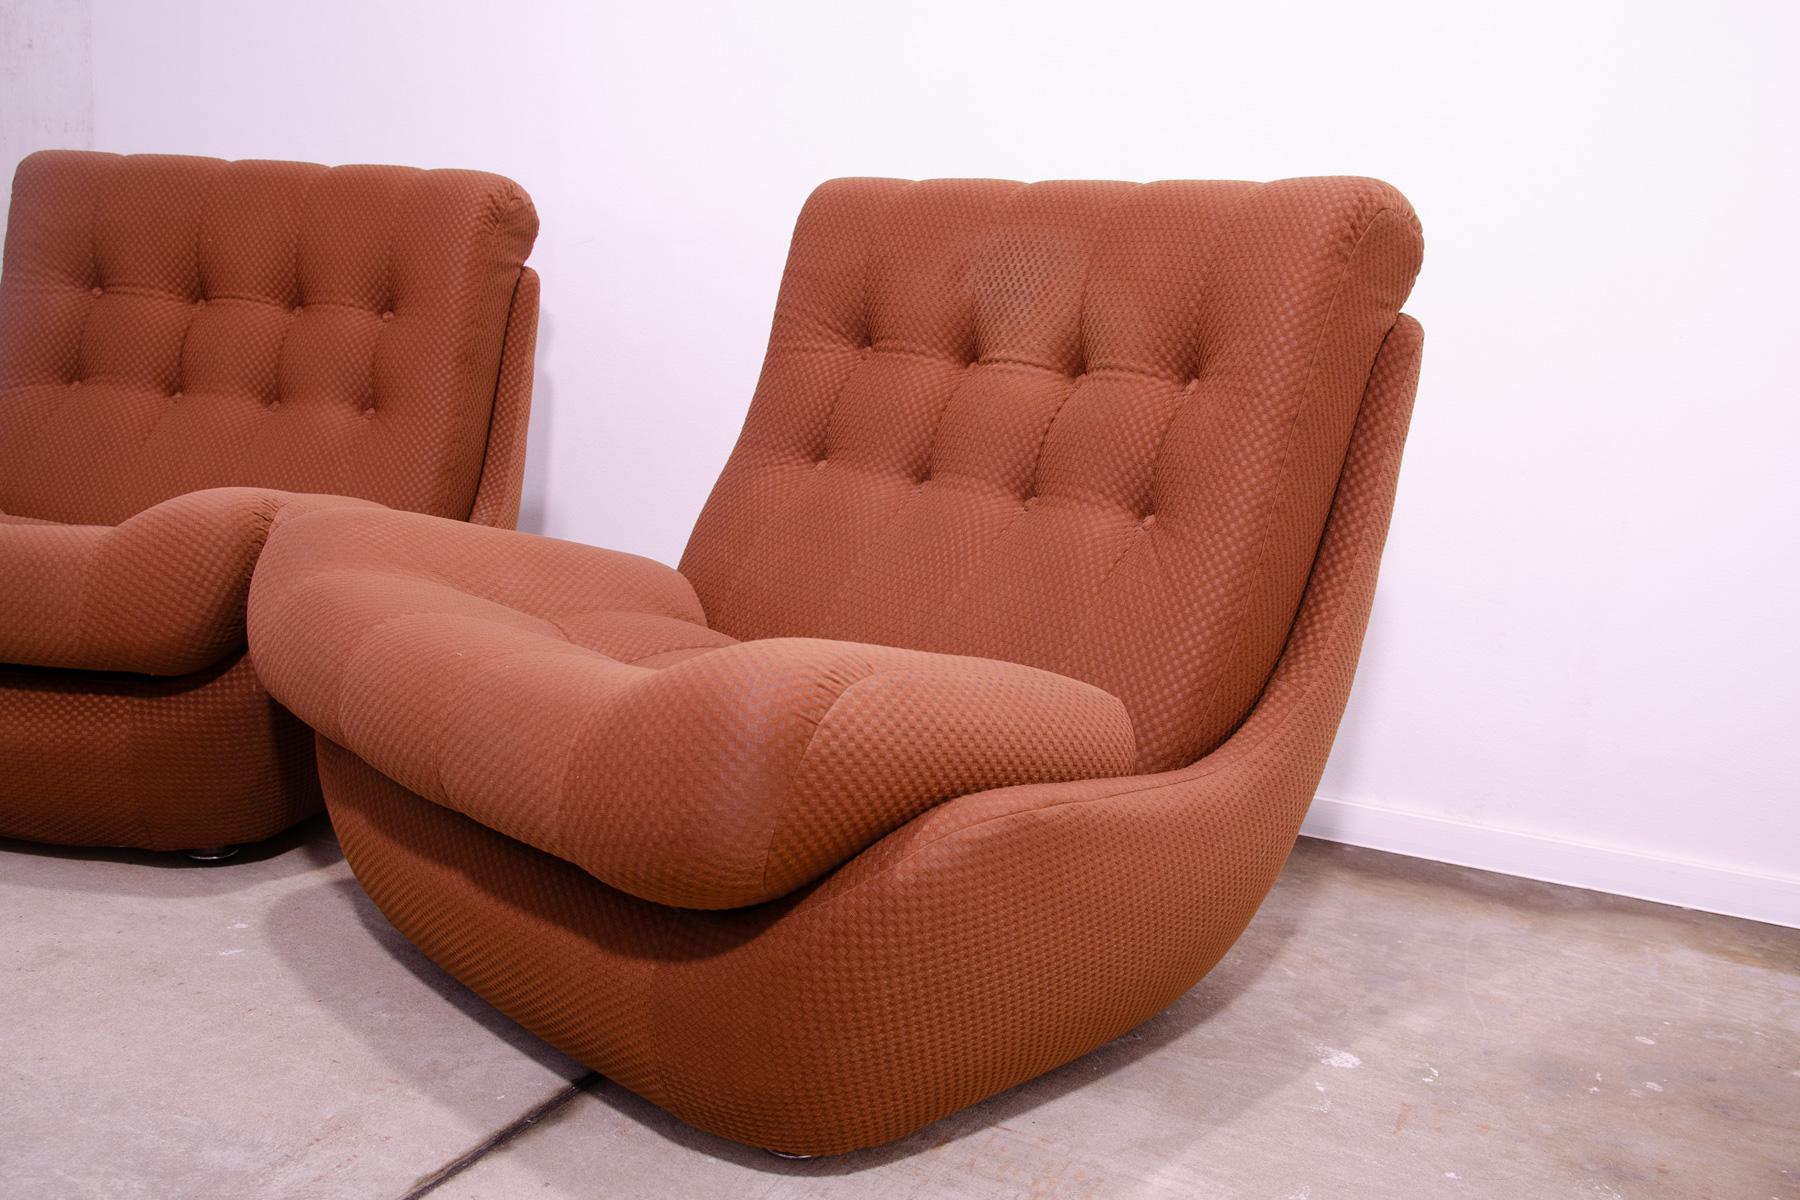 Fabric Eastern Bloc Vintage armchairs by Jitona, Czechoslovakia, 1970s For Sale